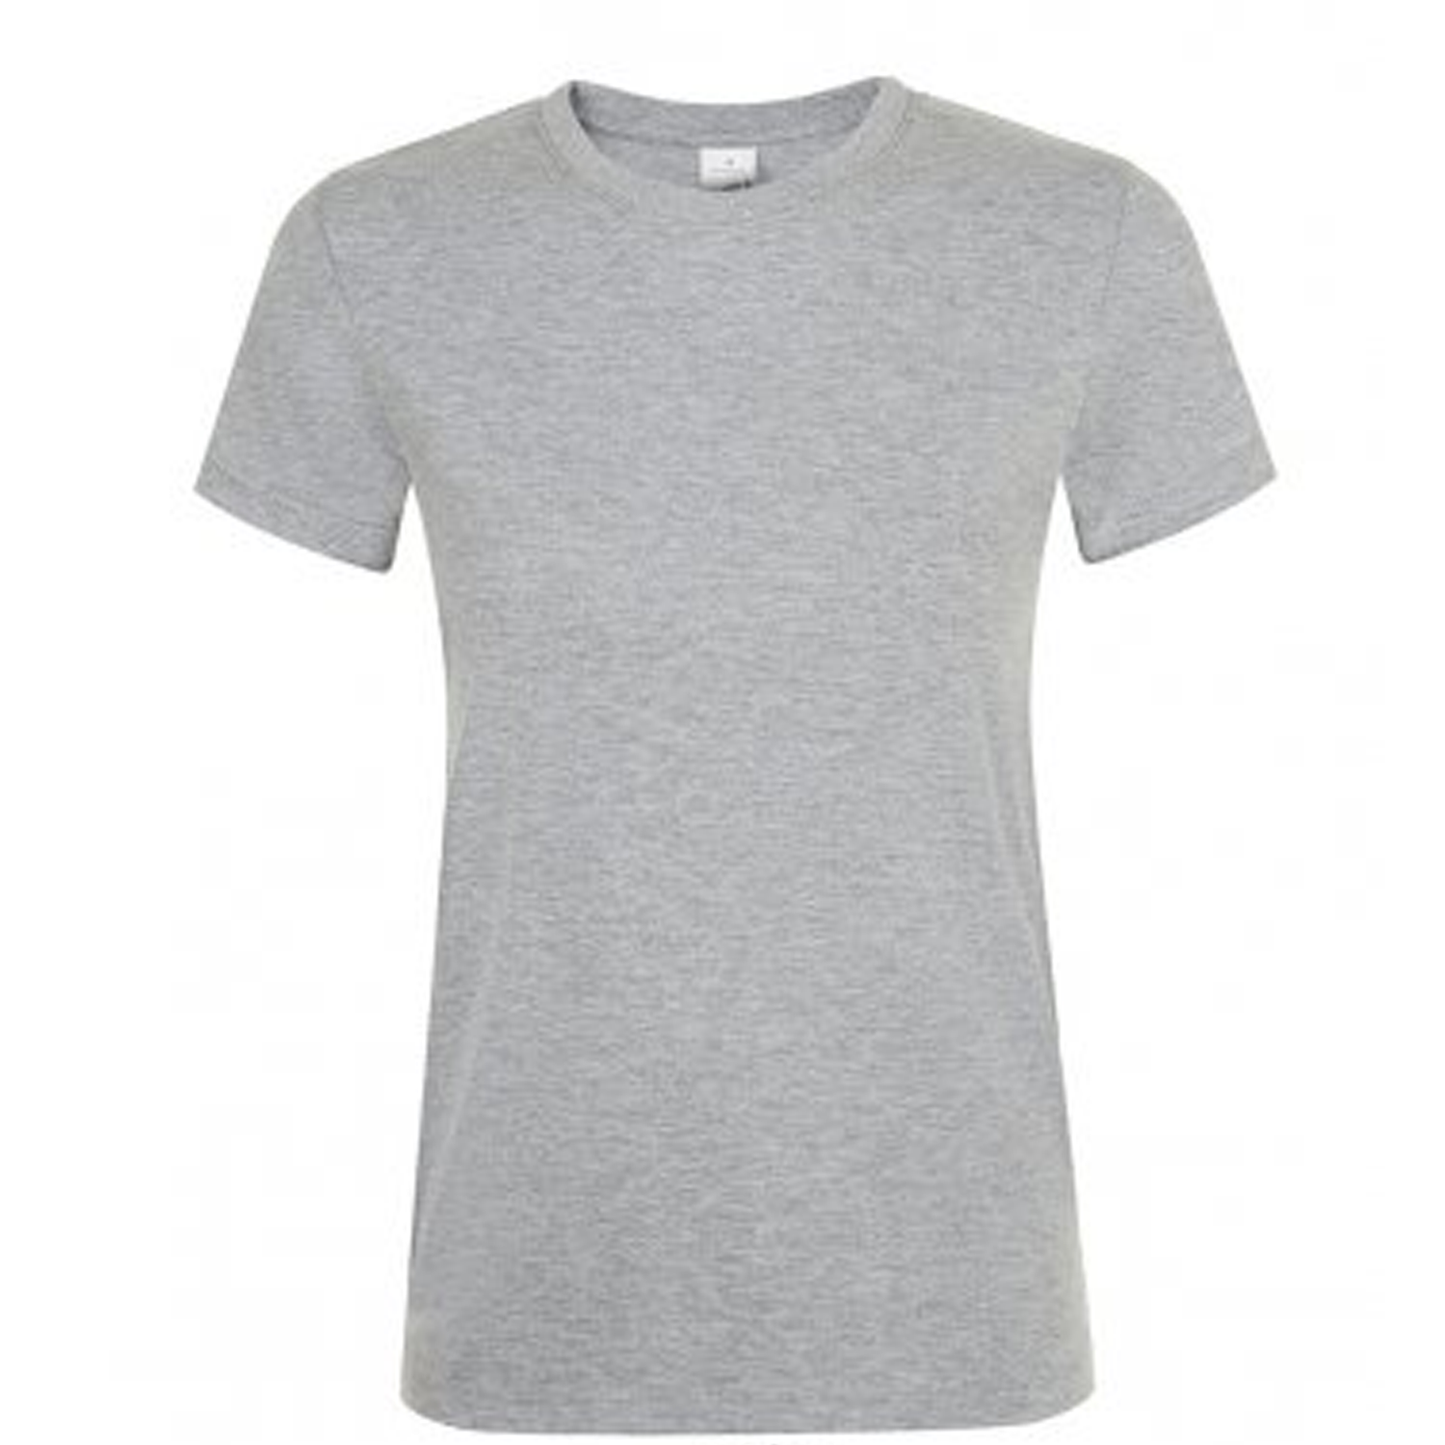 BOY MUM - Less Drama than girls but harder to keep alive grey t-shirt